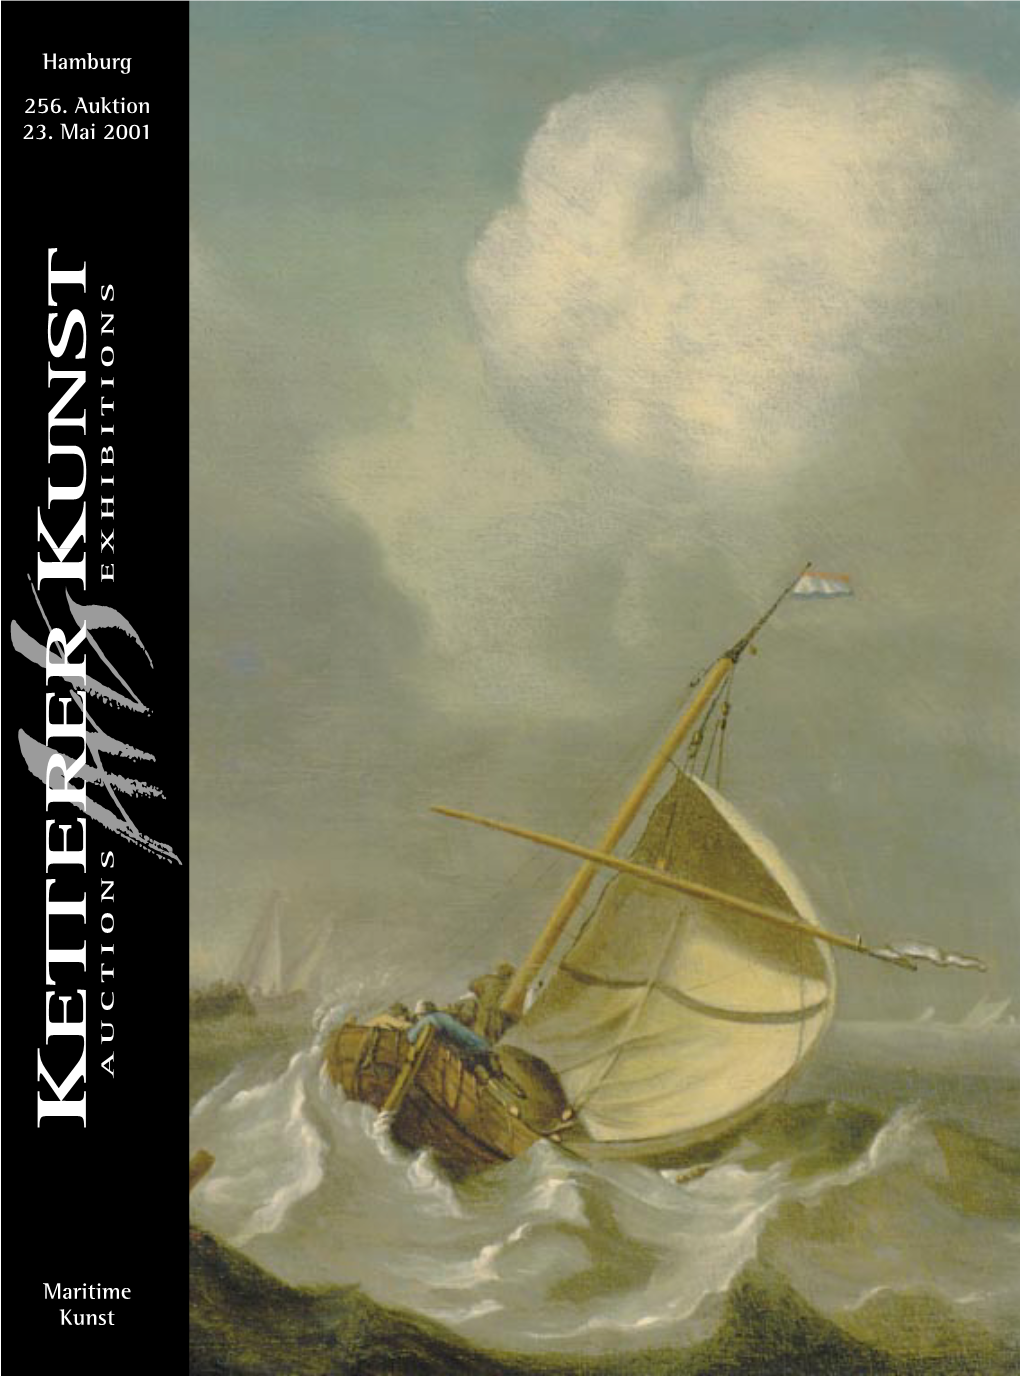 KKH 256. Auktion Maritime Kunst